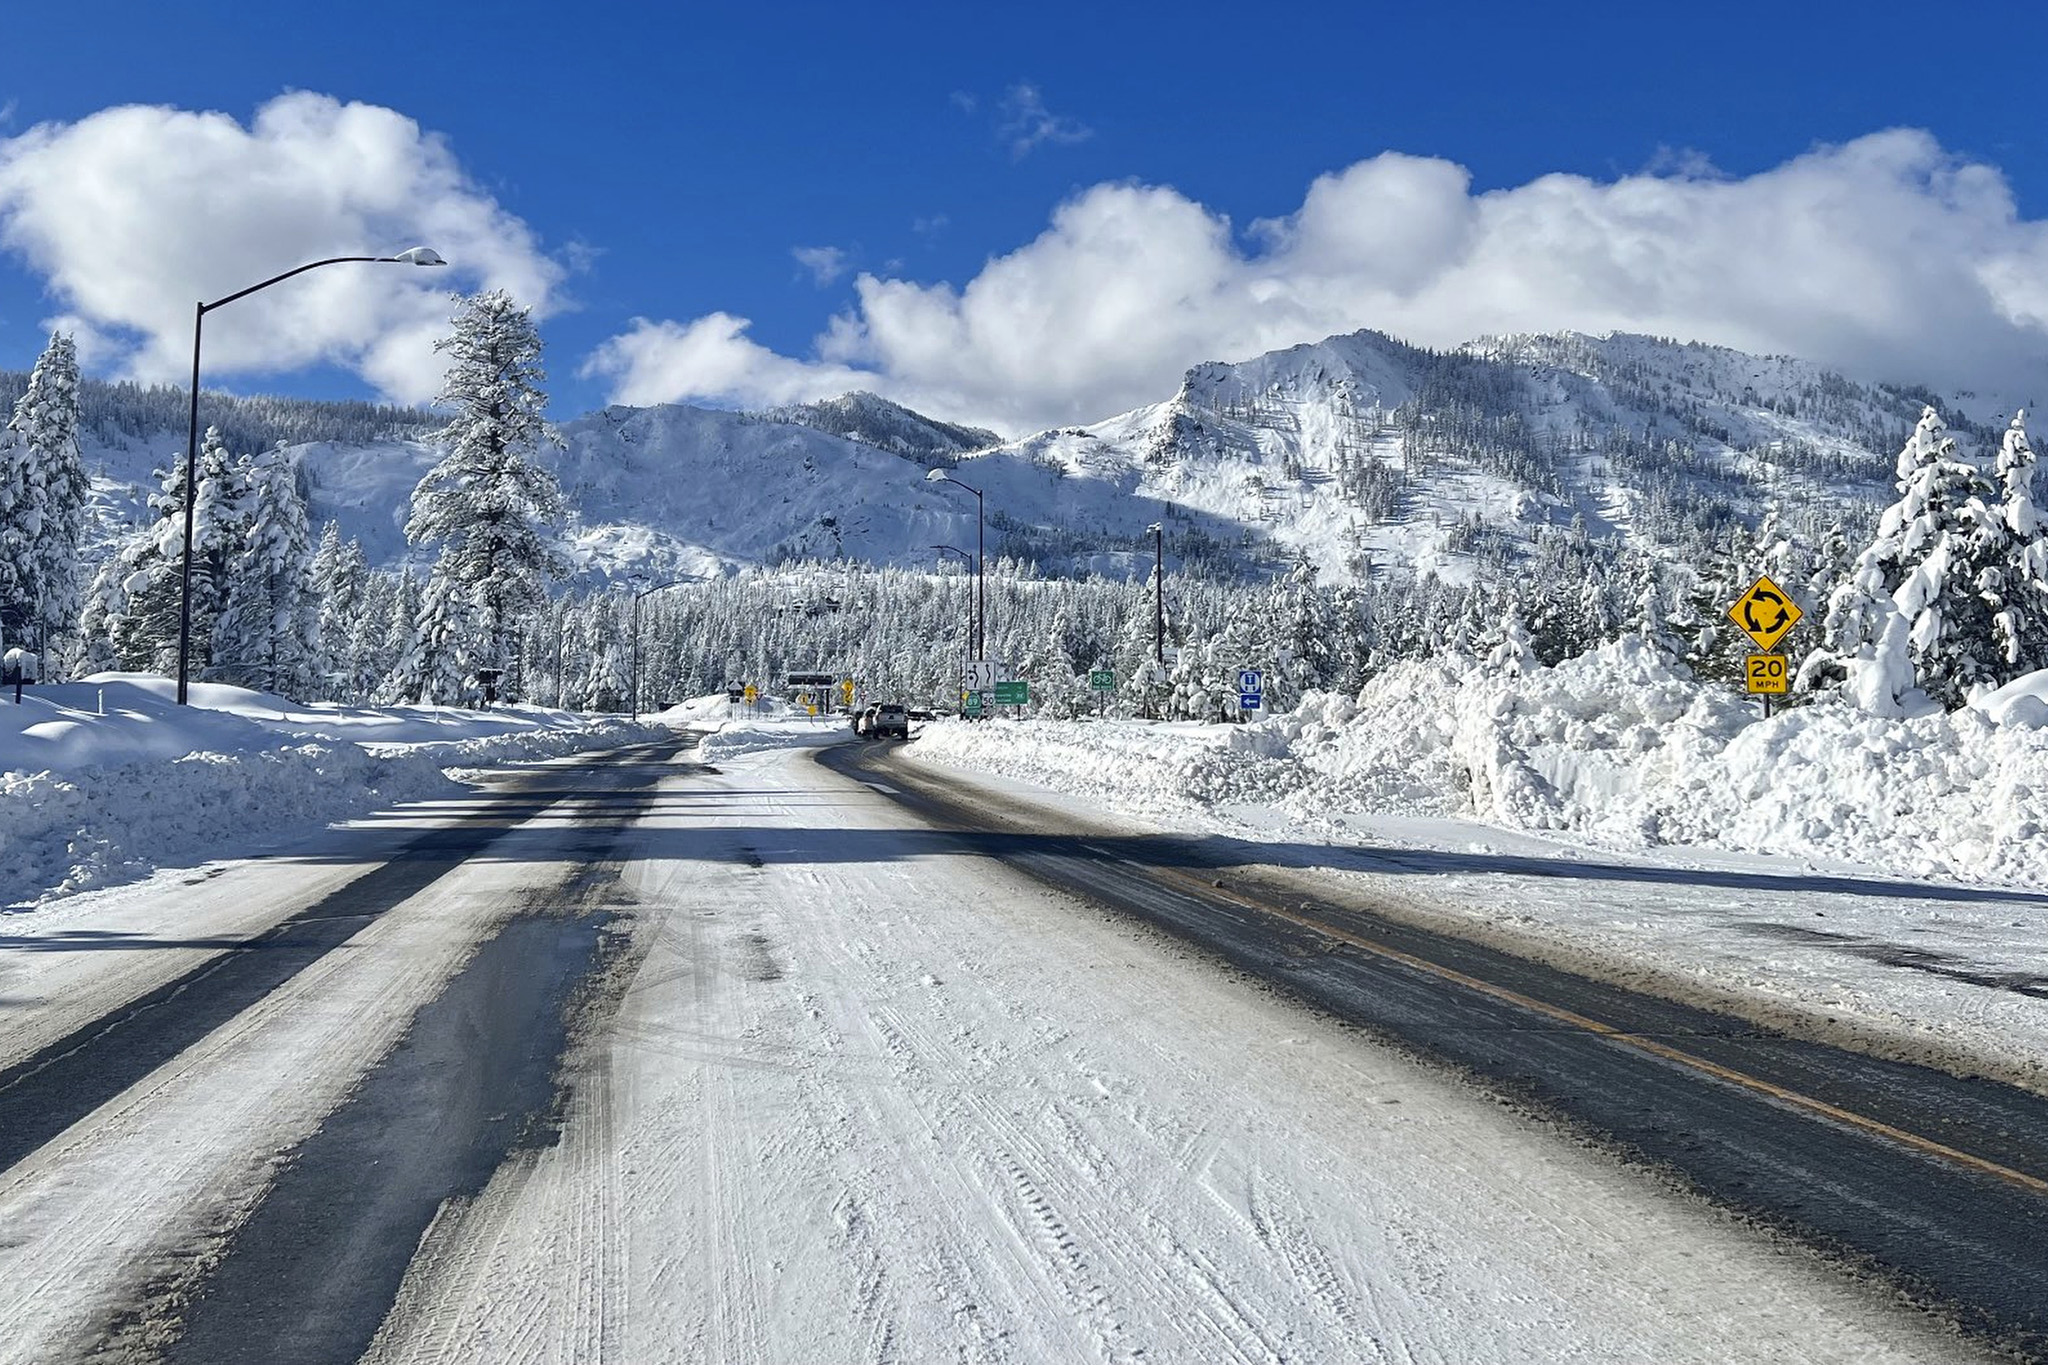 California storms dump 3 to 4 feet of snow across Tahoe area